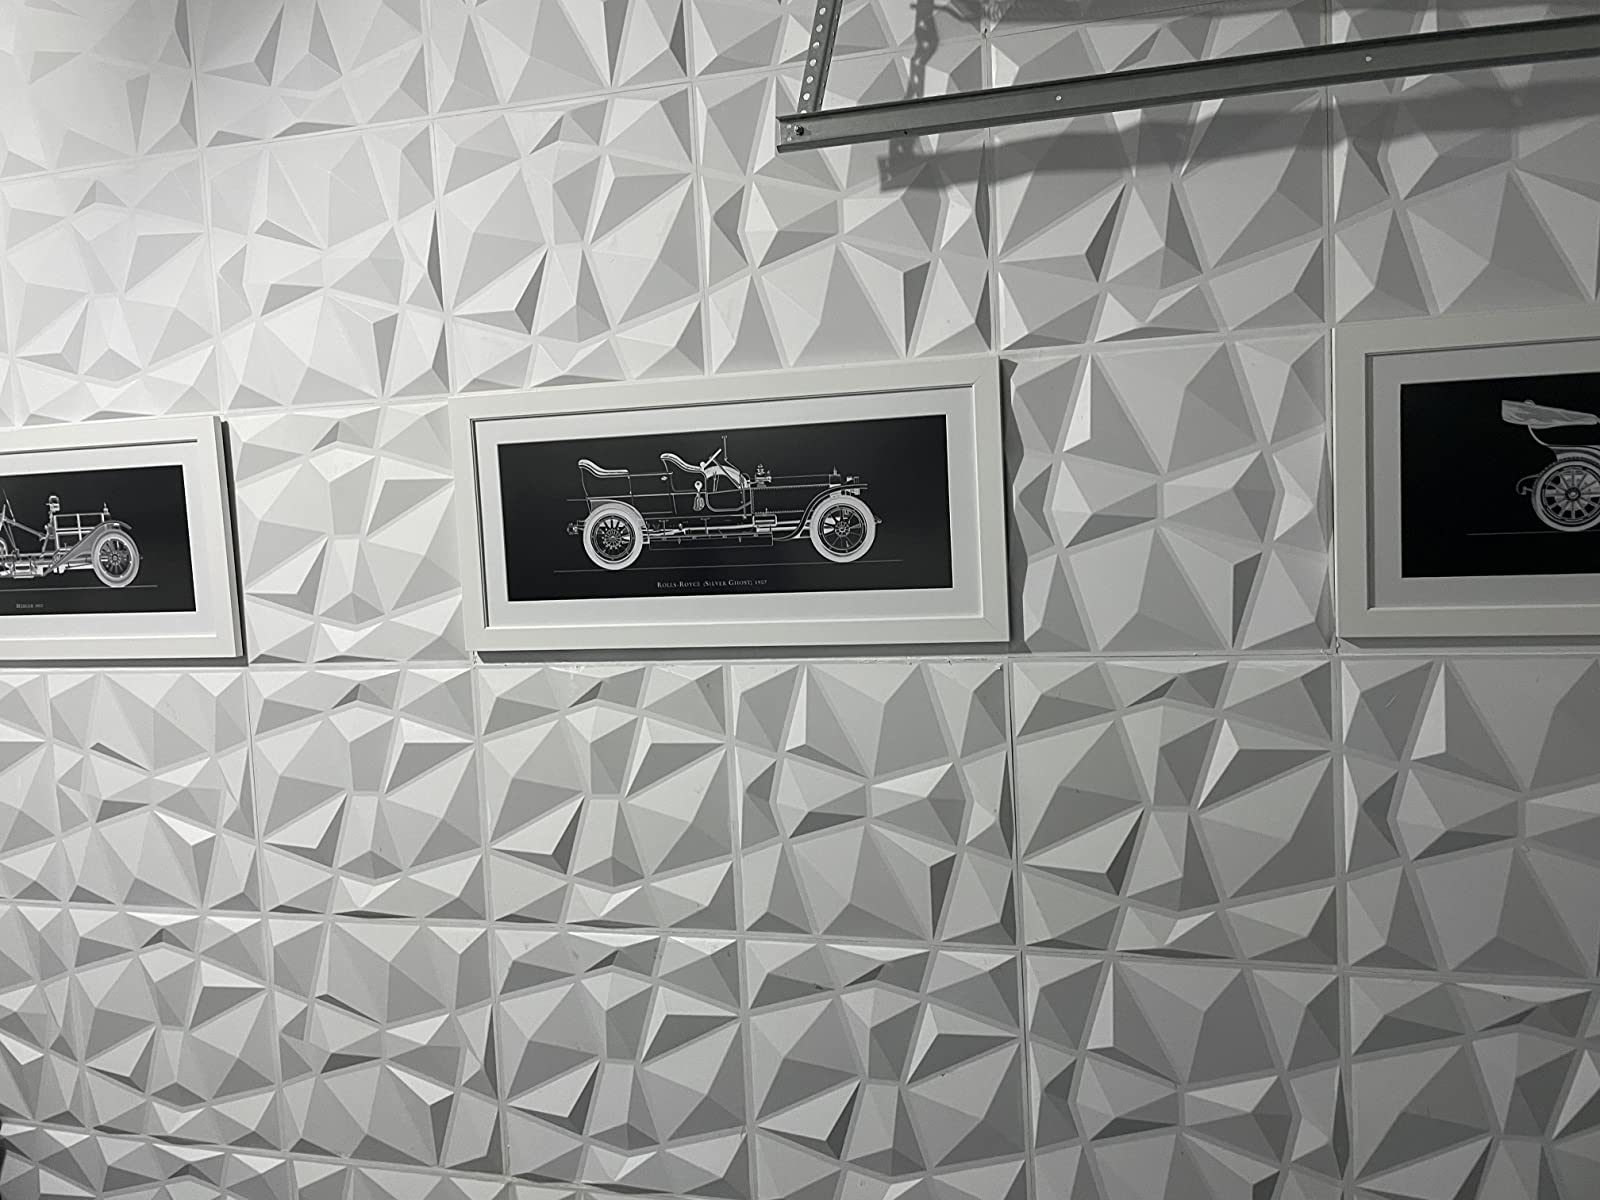 Art3d 3D Wall Panels Home Decor TV Background Board,19.7x19.7 ,12Pcs,32 SF